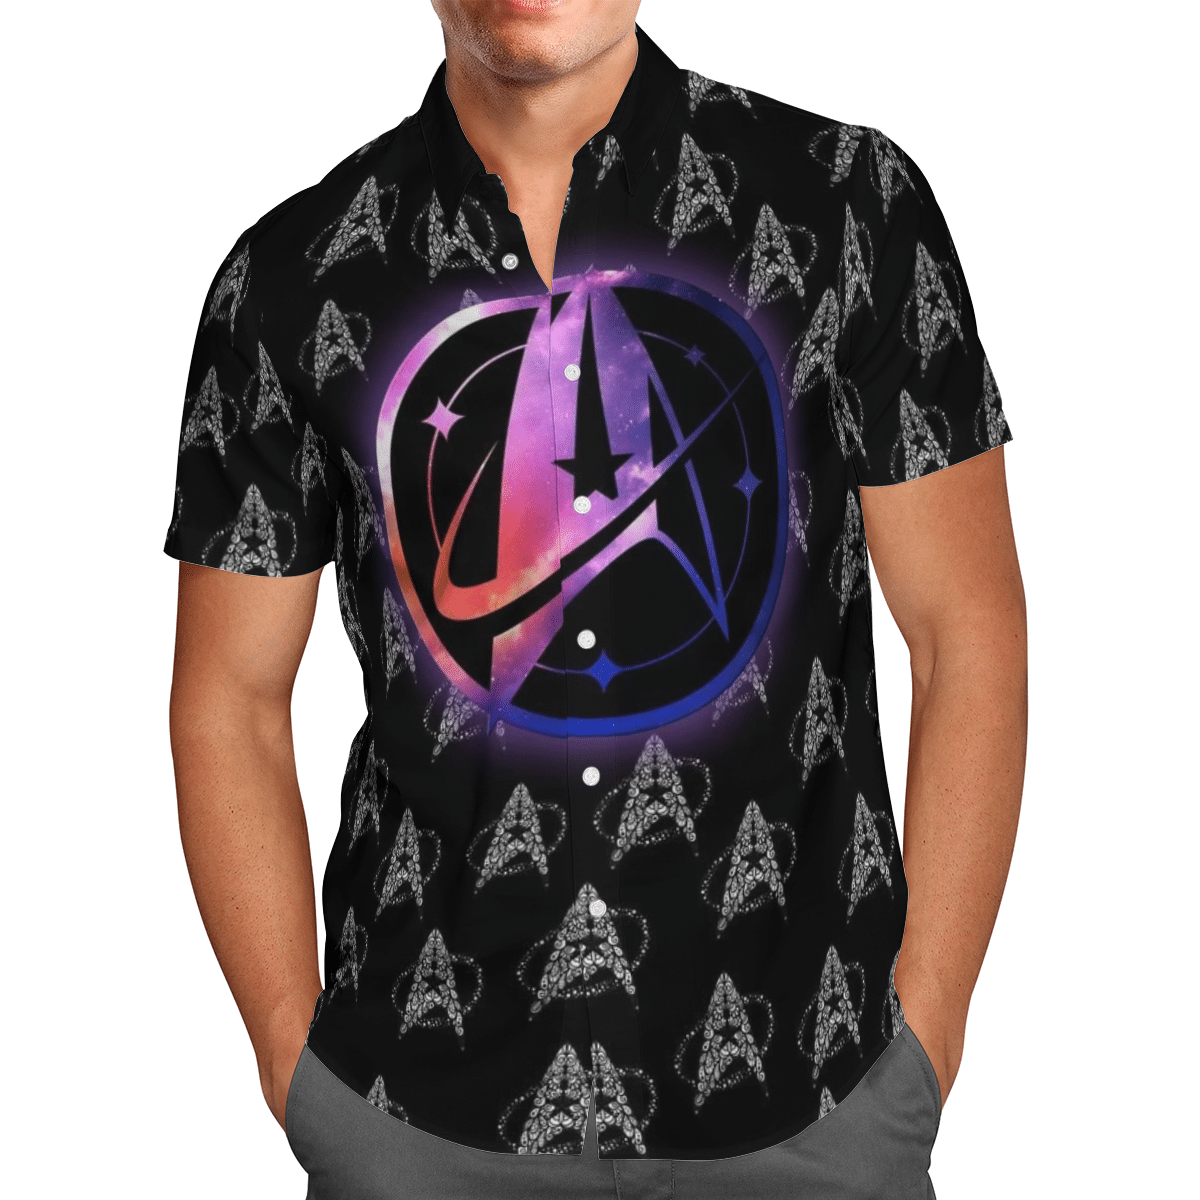 Star trek voyager Hawaiian shirt – LIMITED EDITION